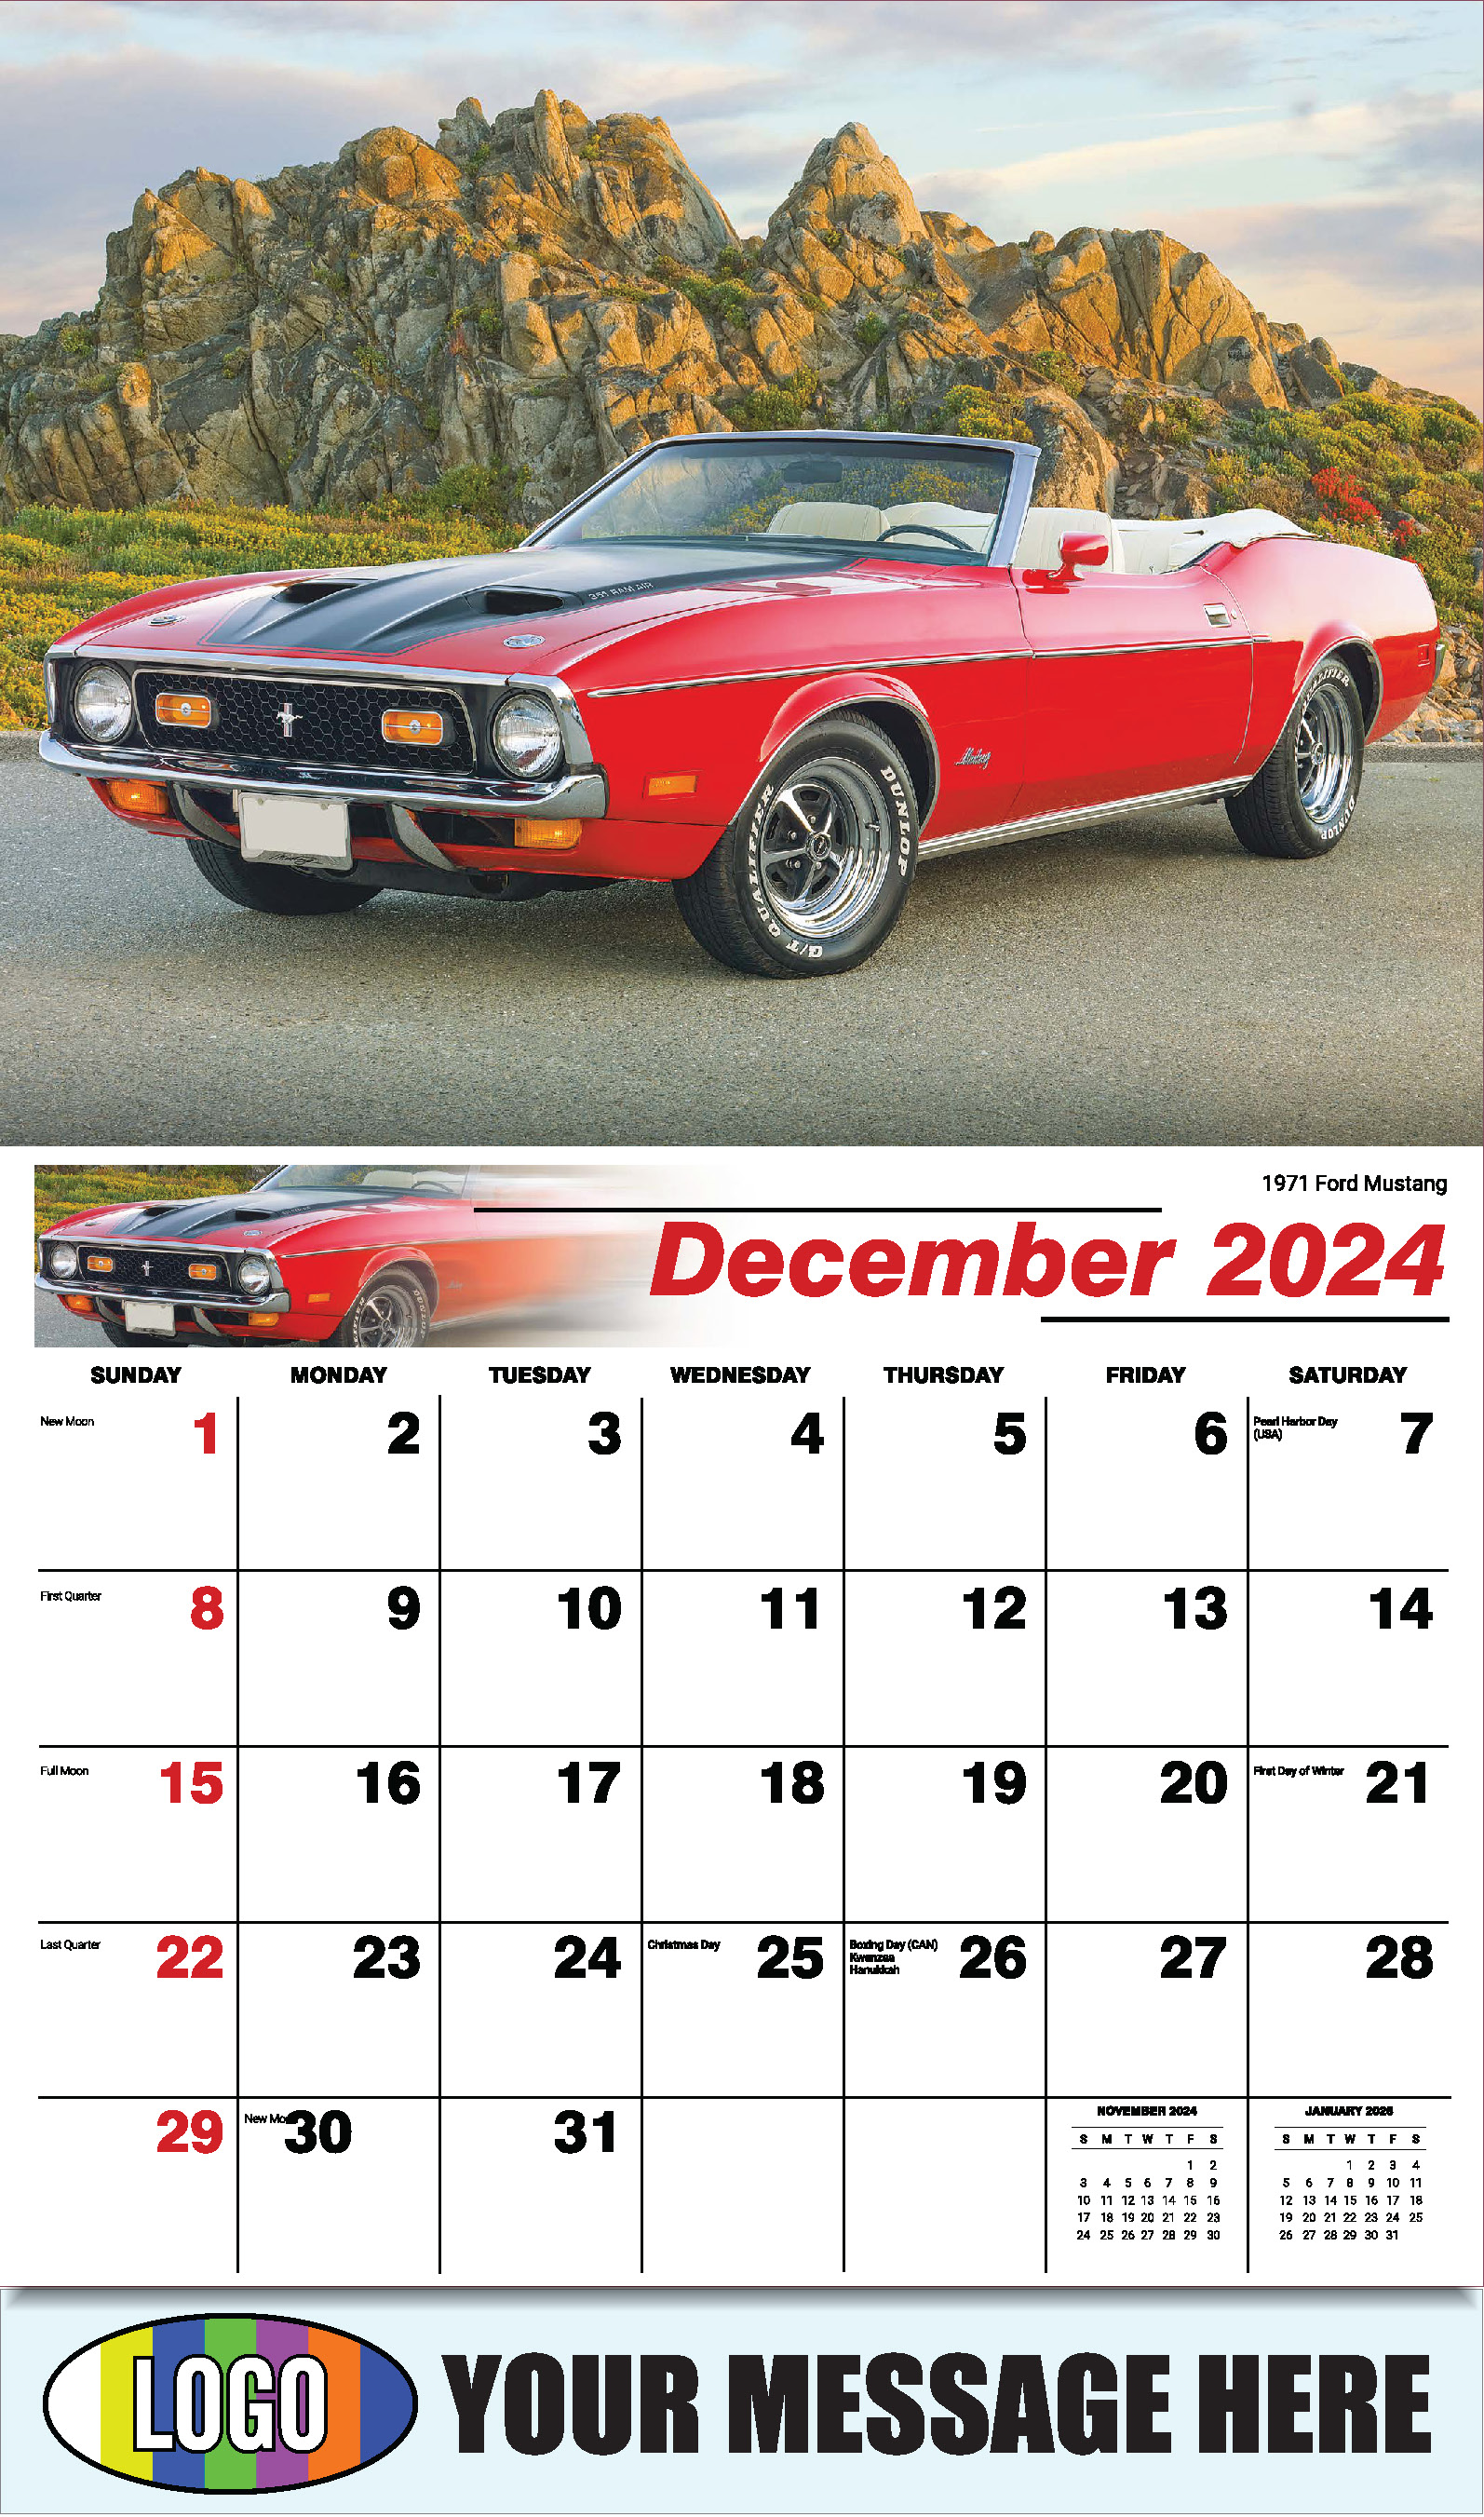 Classic Cars 2025 Automotive Business Promo Calendar - December_a